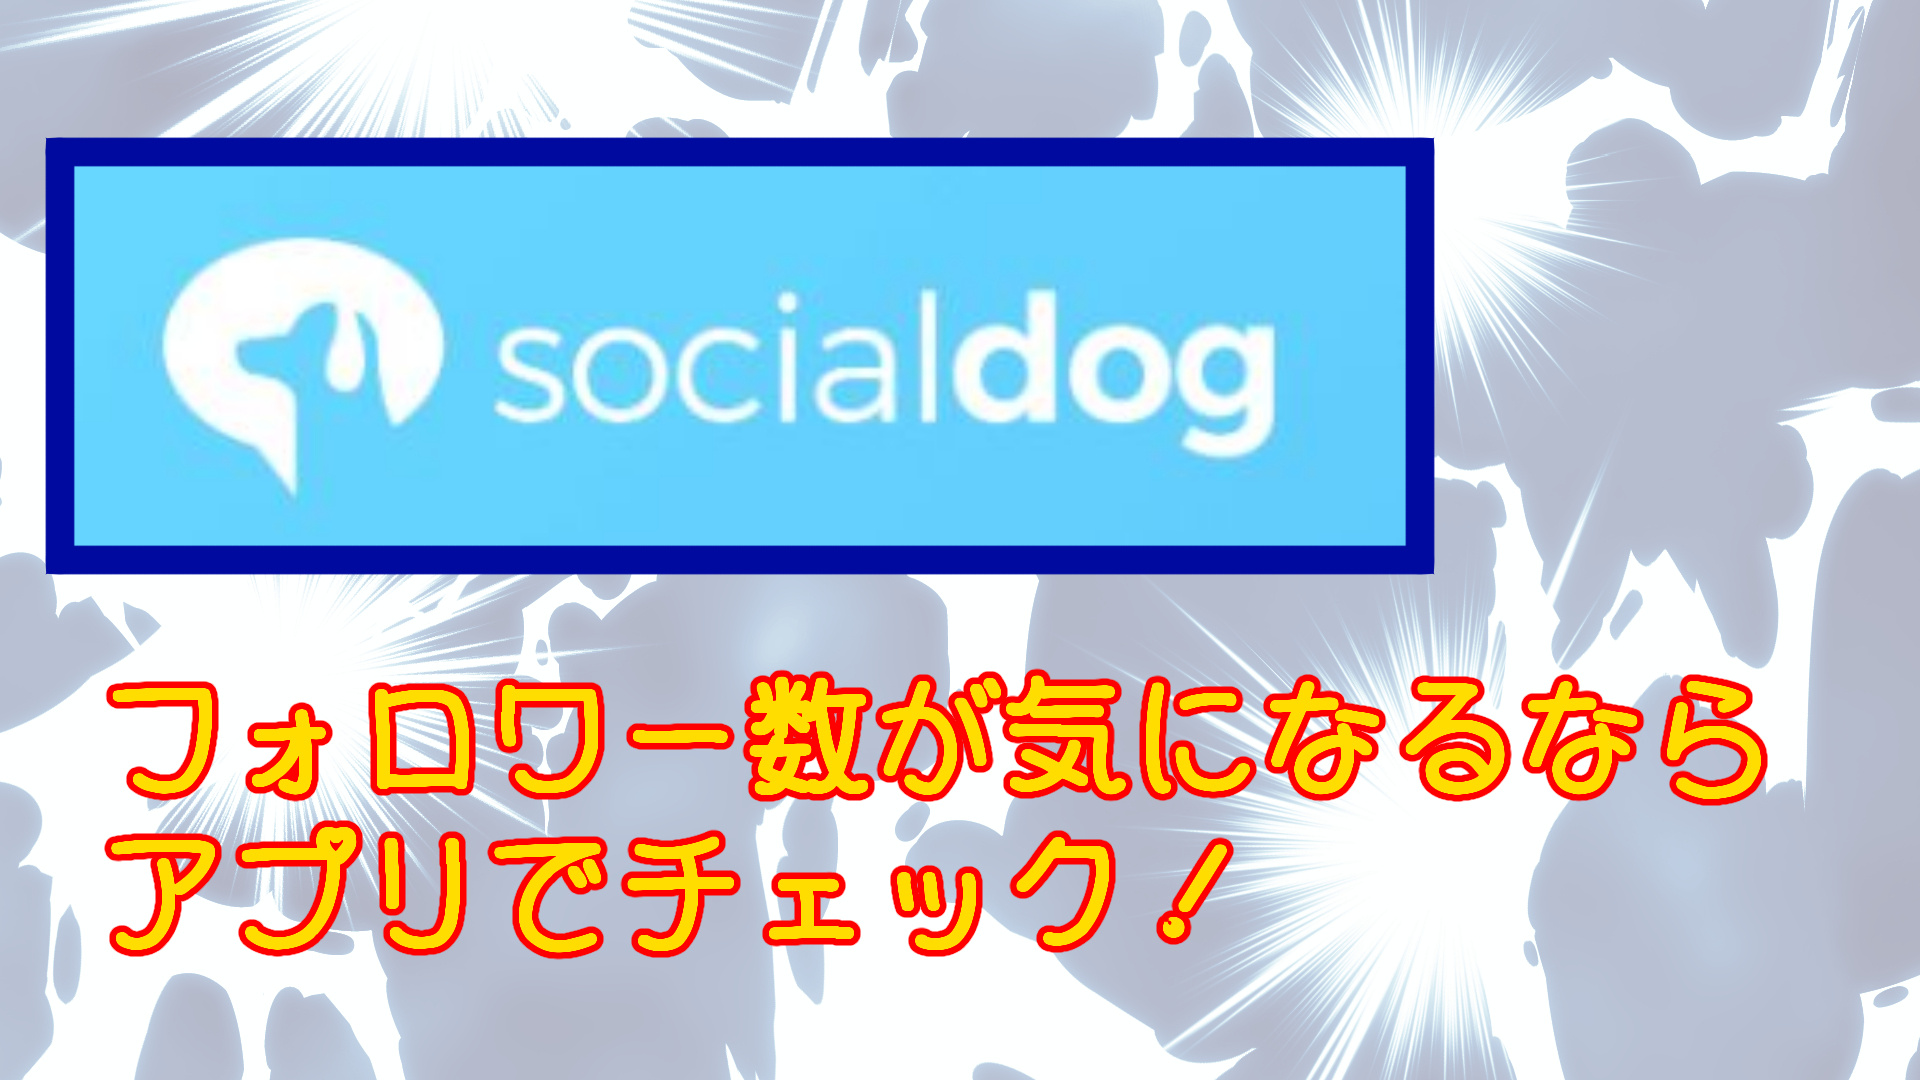 socialdog